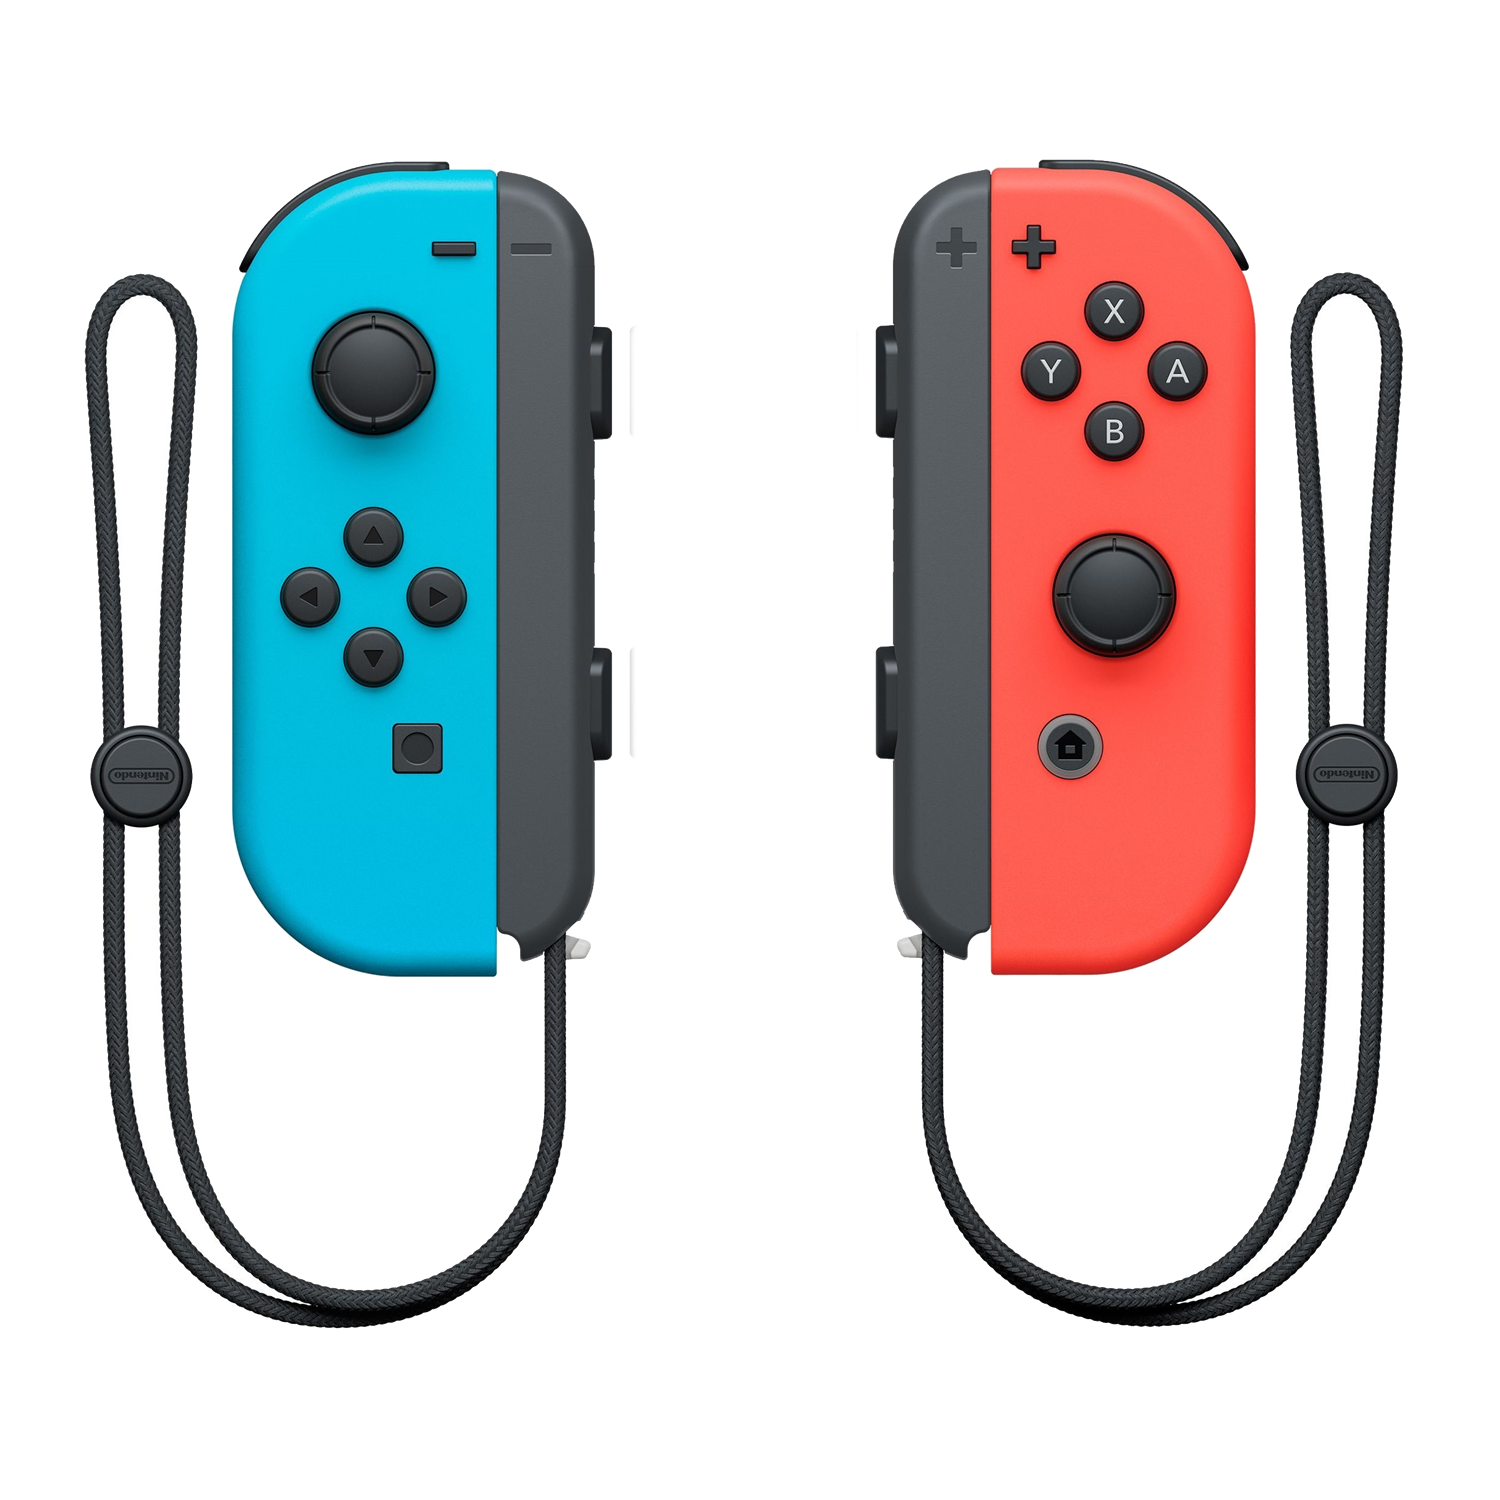 Gamepad Nintendo Switch Joy-Con Pair Neon Red/Neon Blue